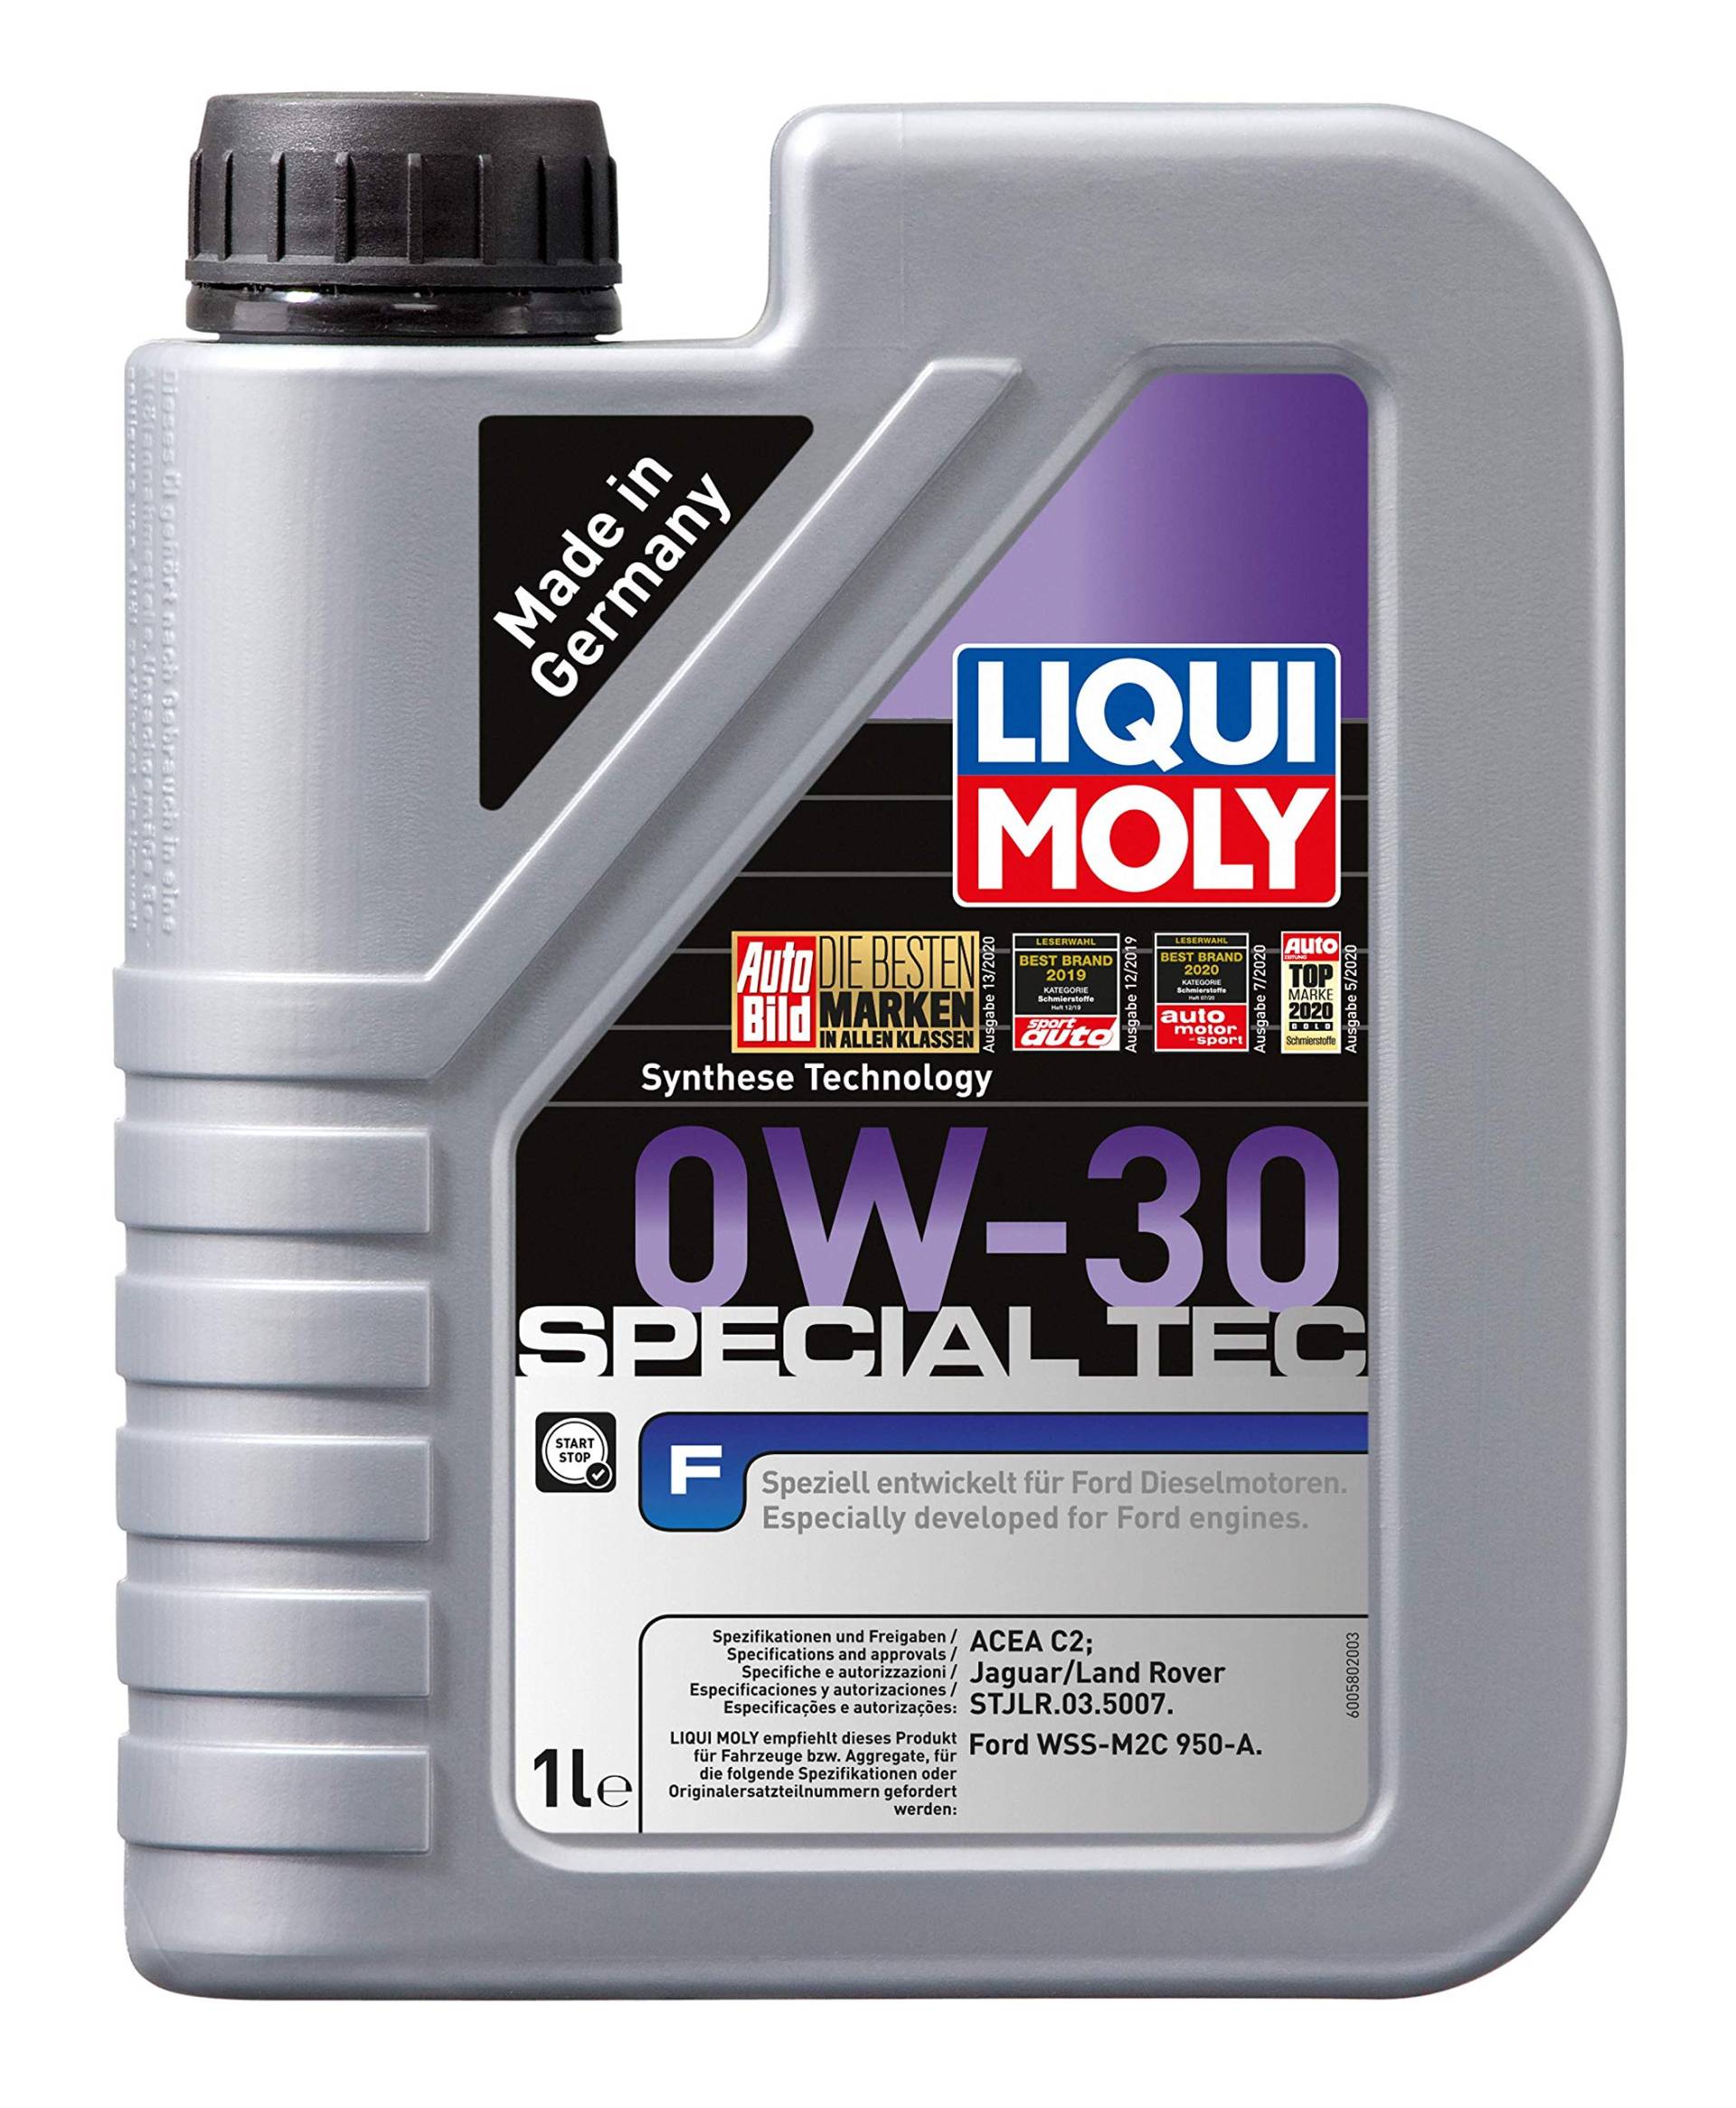 LIQUI MOLY Special Tec F 0W-30 | 1 L | Synthesetechnologie Motoröl | Art.-Nr.: 20722 von Liqui Moly